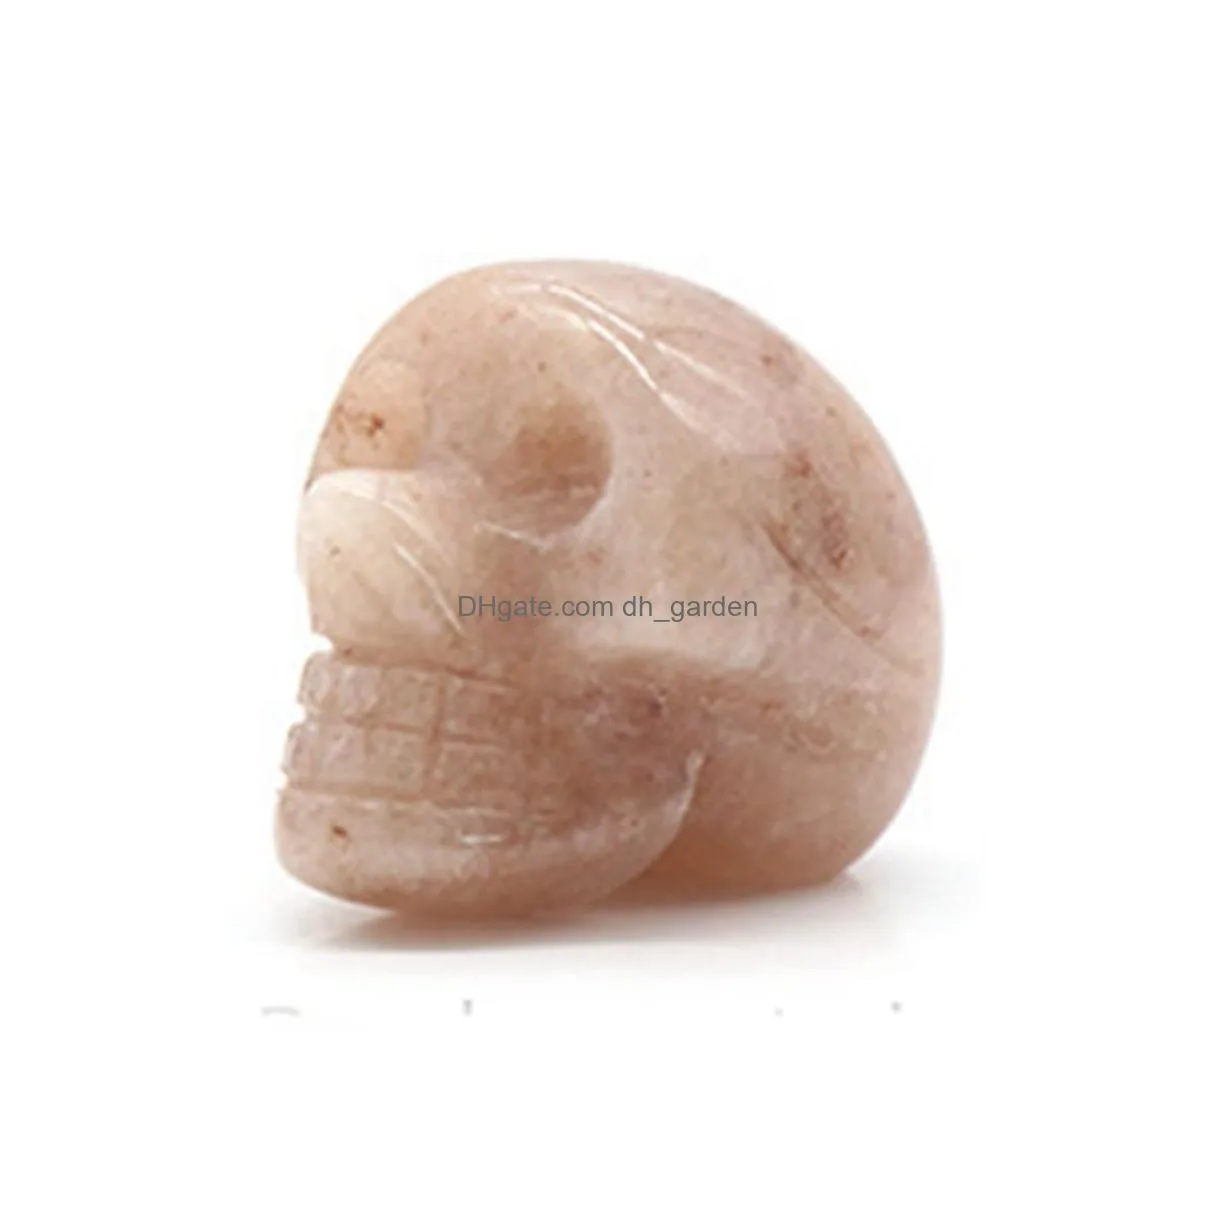 23mm natural sodalite skull head decor statue hand carved polished gemstone human skull figurine pocket reiki healing stone for home